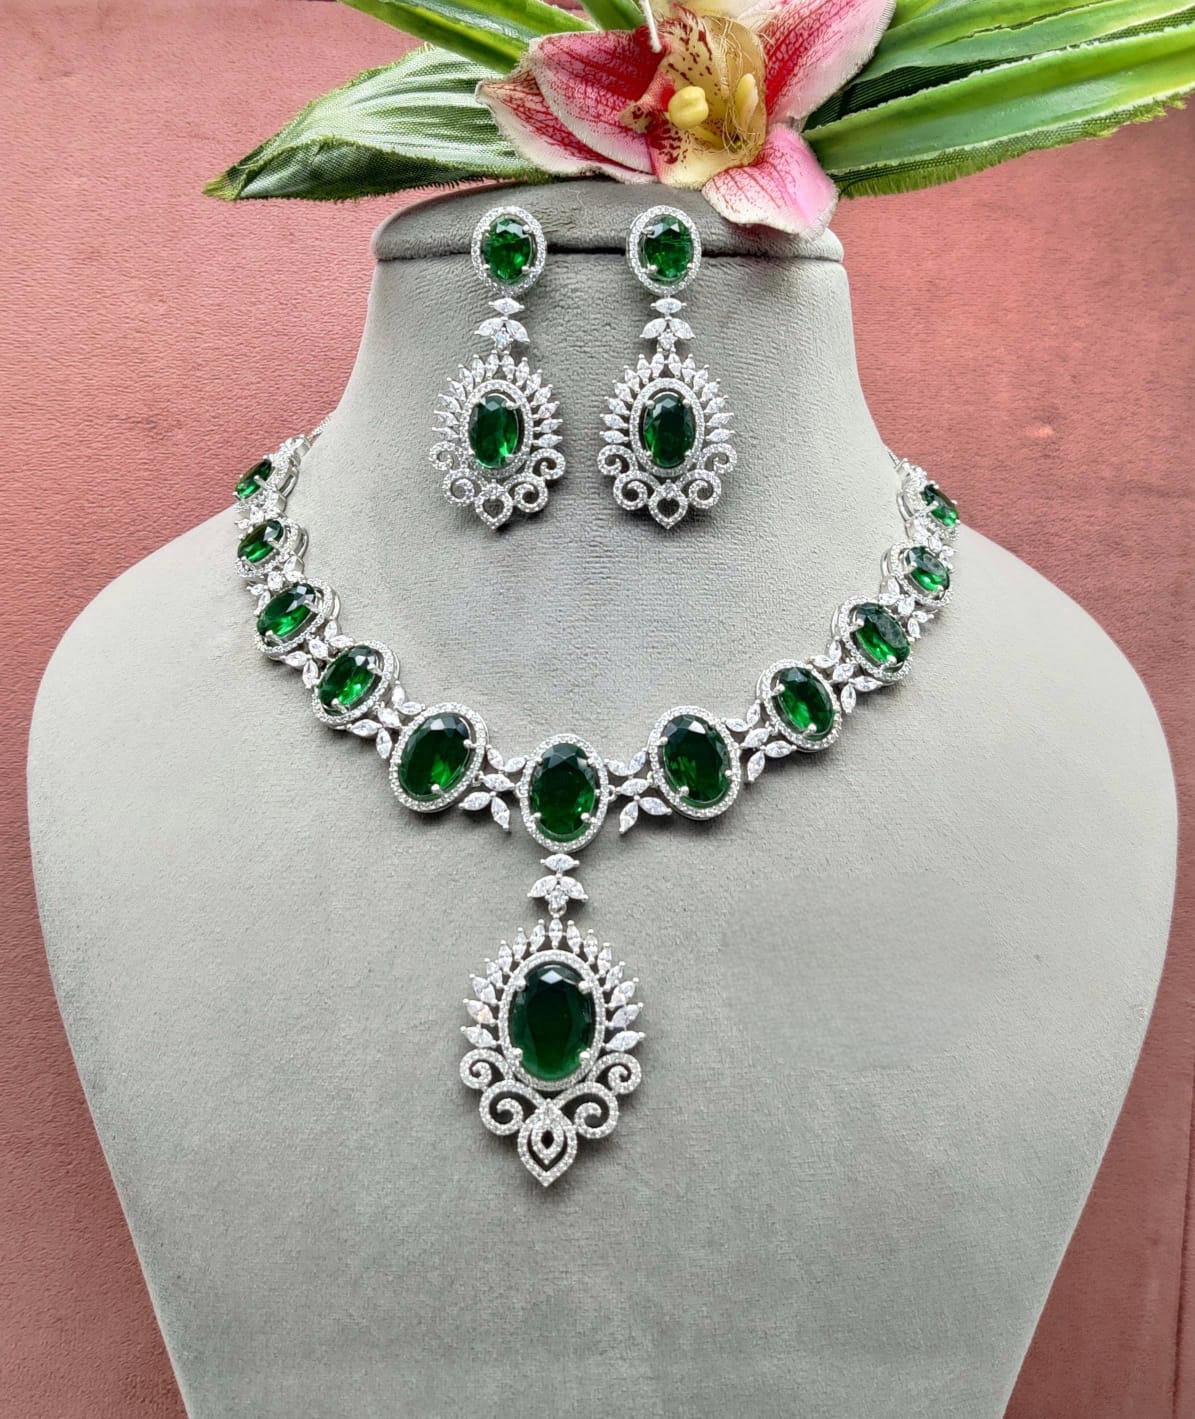 American Diamond Necklace Set with Earrings, occassion necklace, beautiful neckpiece